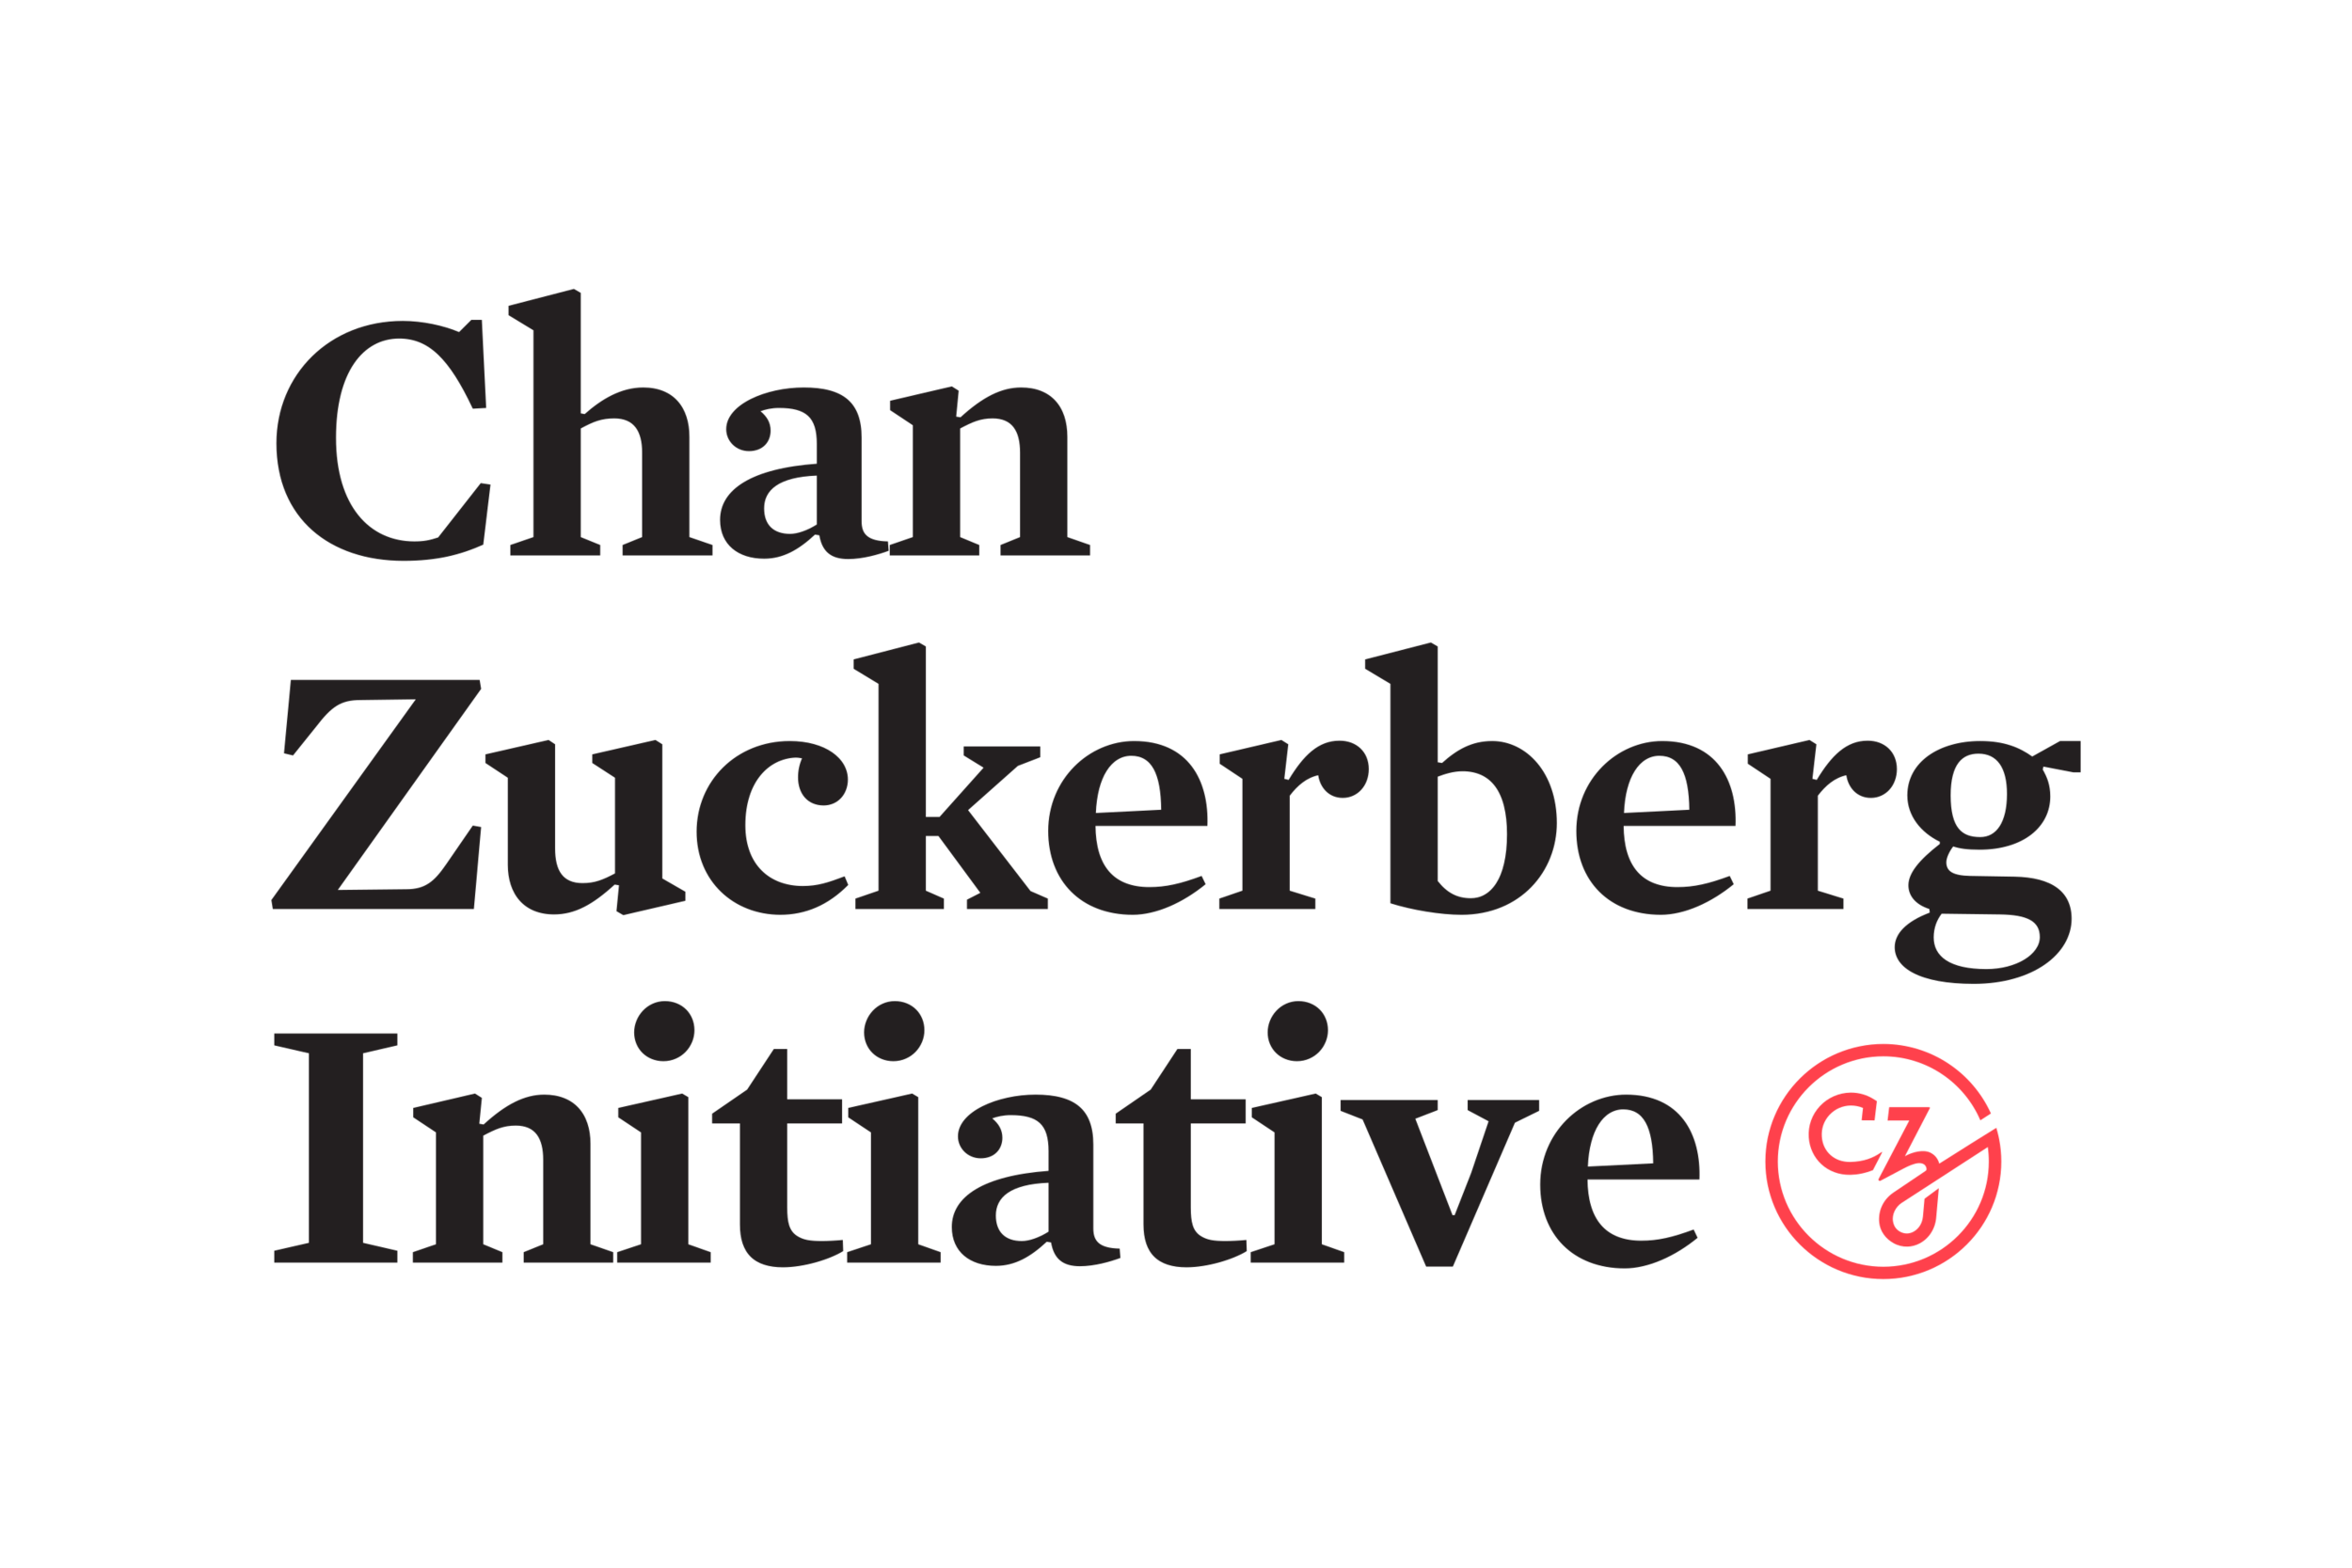 Chan_Zuckerberg_Initiative-Logo.wine.png